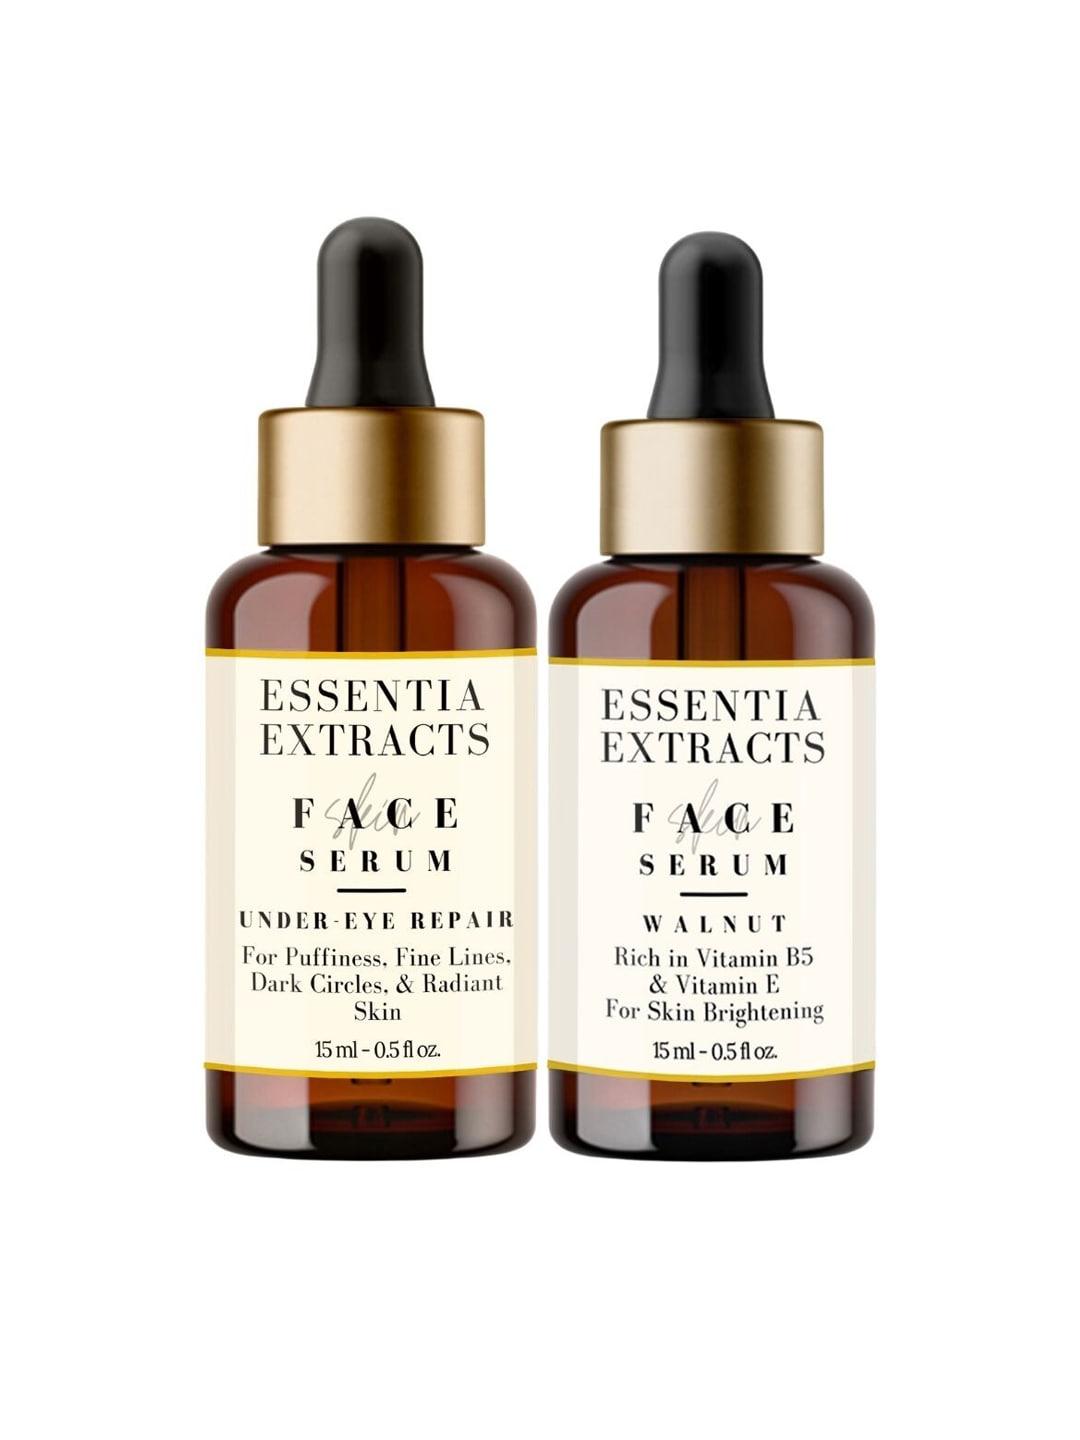 essentia extracts set of walnut facial serum & under eye repair serum - 15 ml each